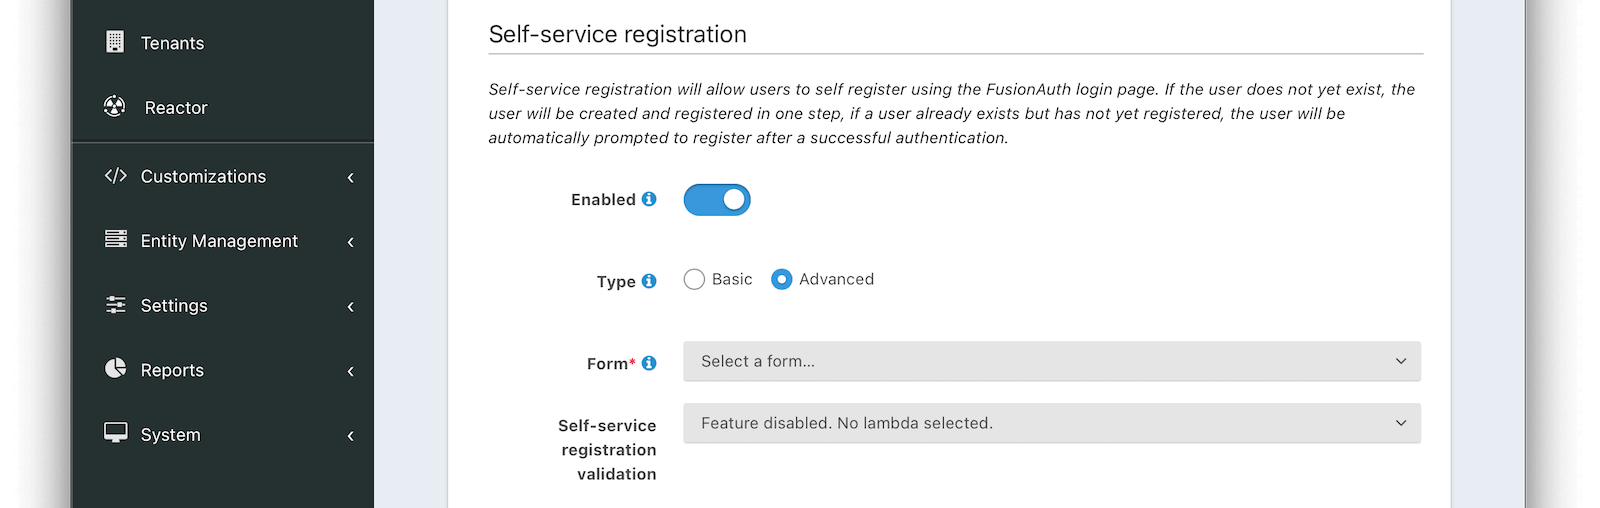 Advanced Self Service Registration